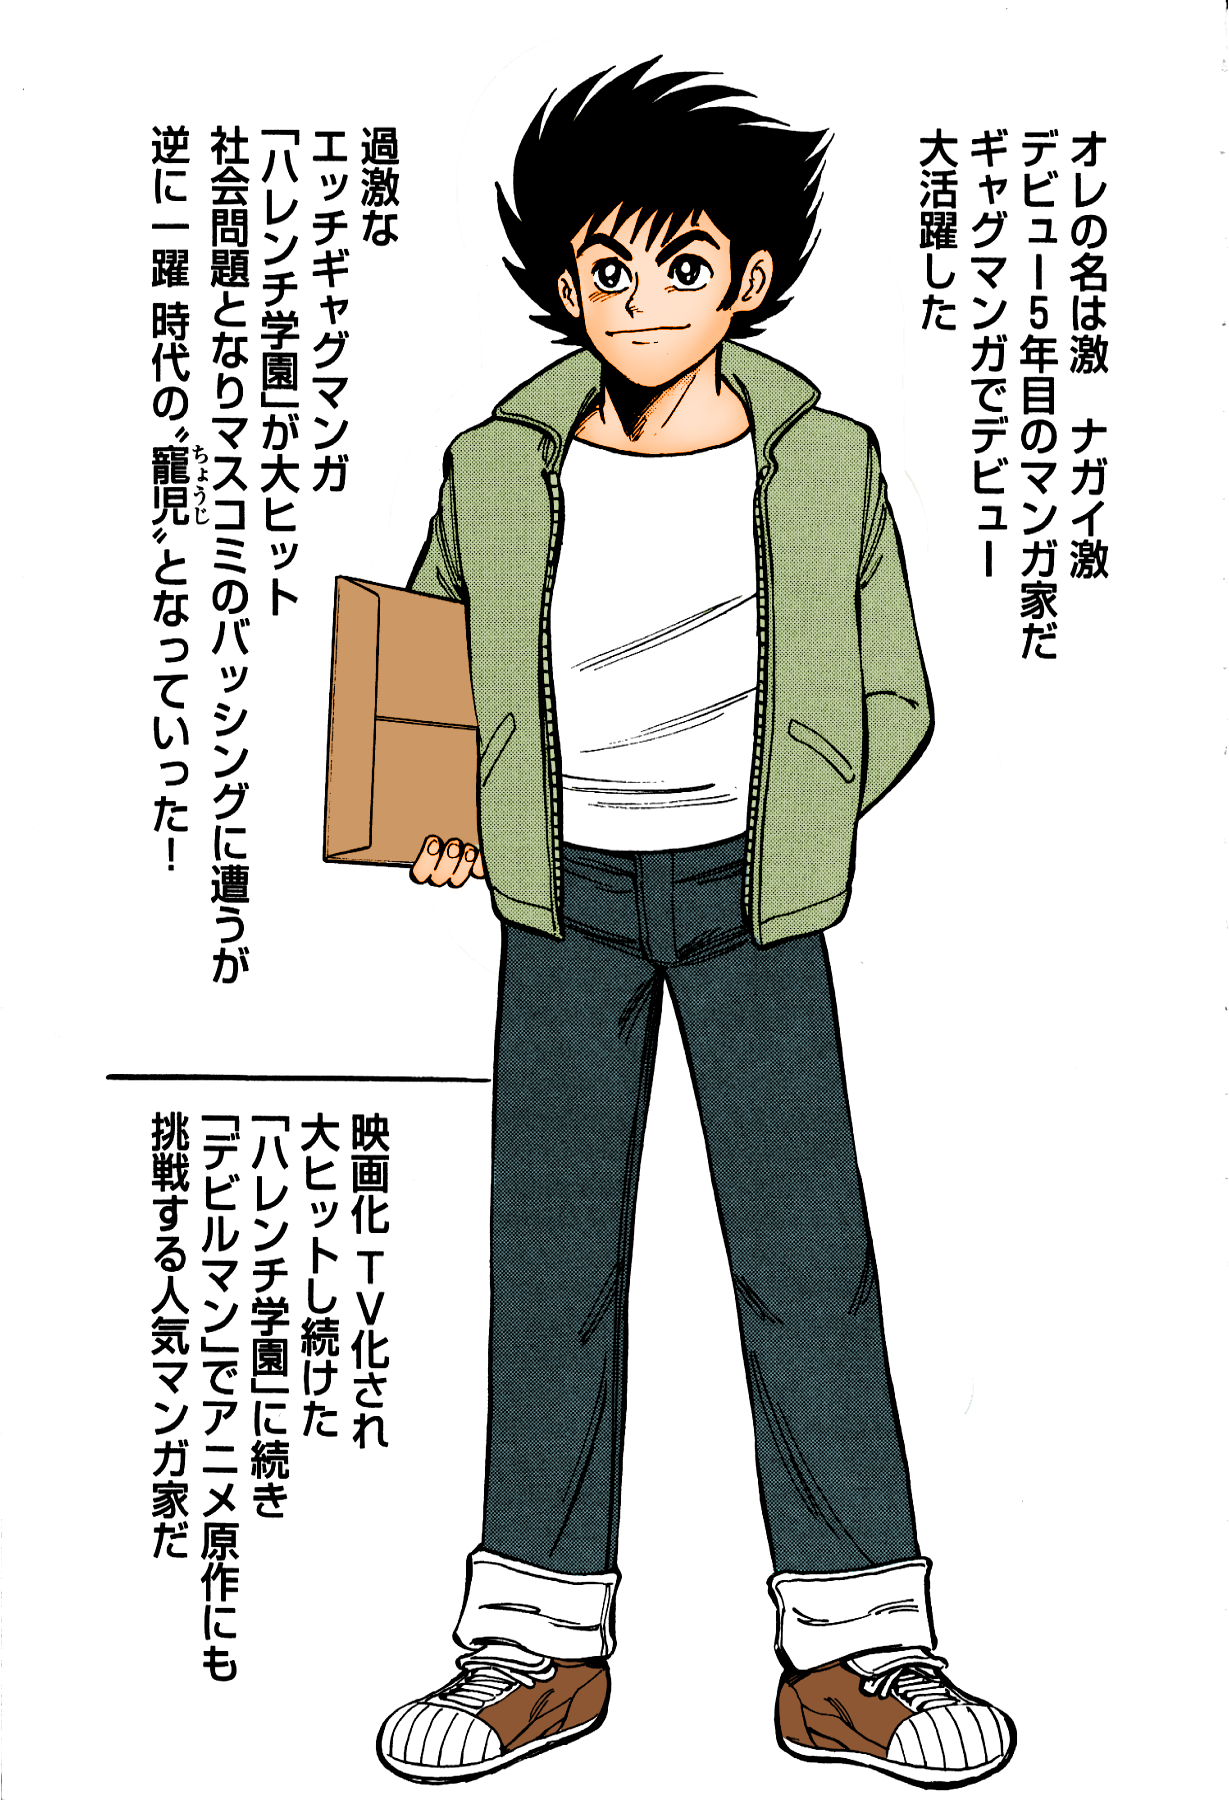 Dragon Ball Super Manga 16 color by bolman2003JUMP on DeviantArt